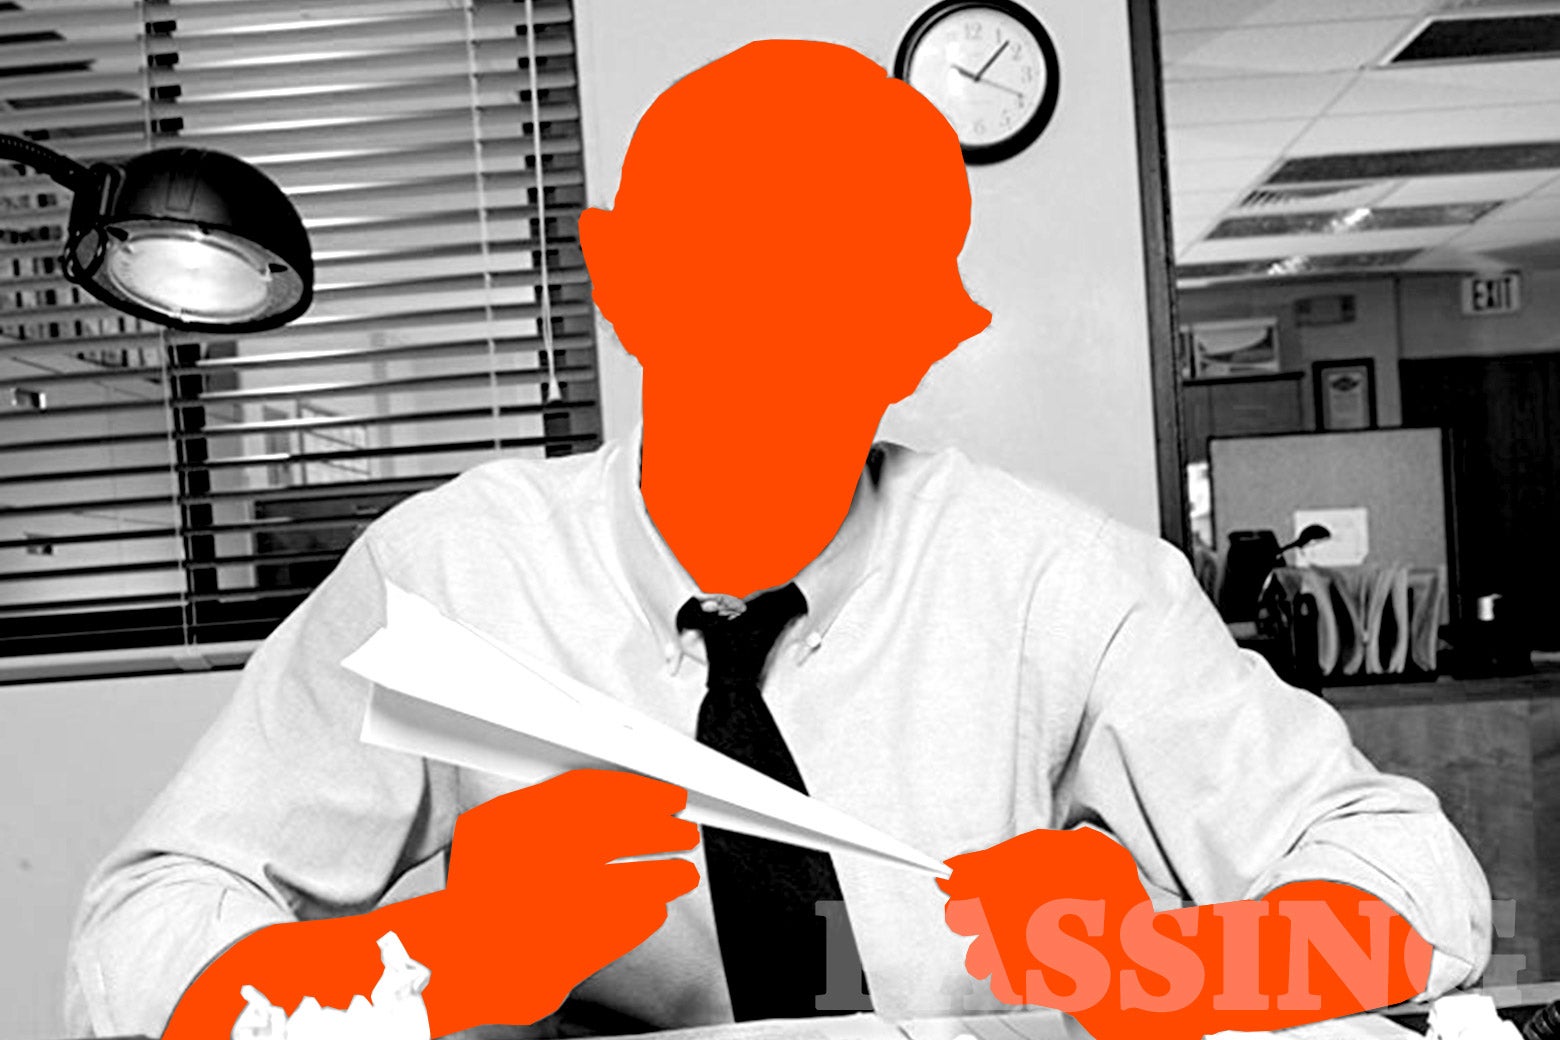 John Krasinski as Jim Halpert in The Office, silhouetted out in orange.